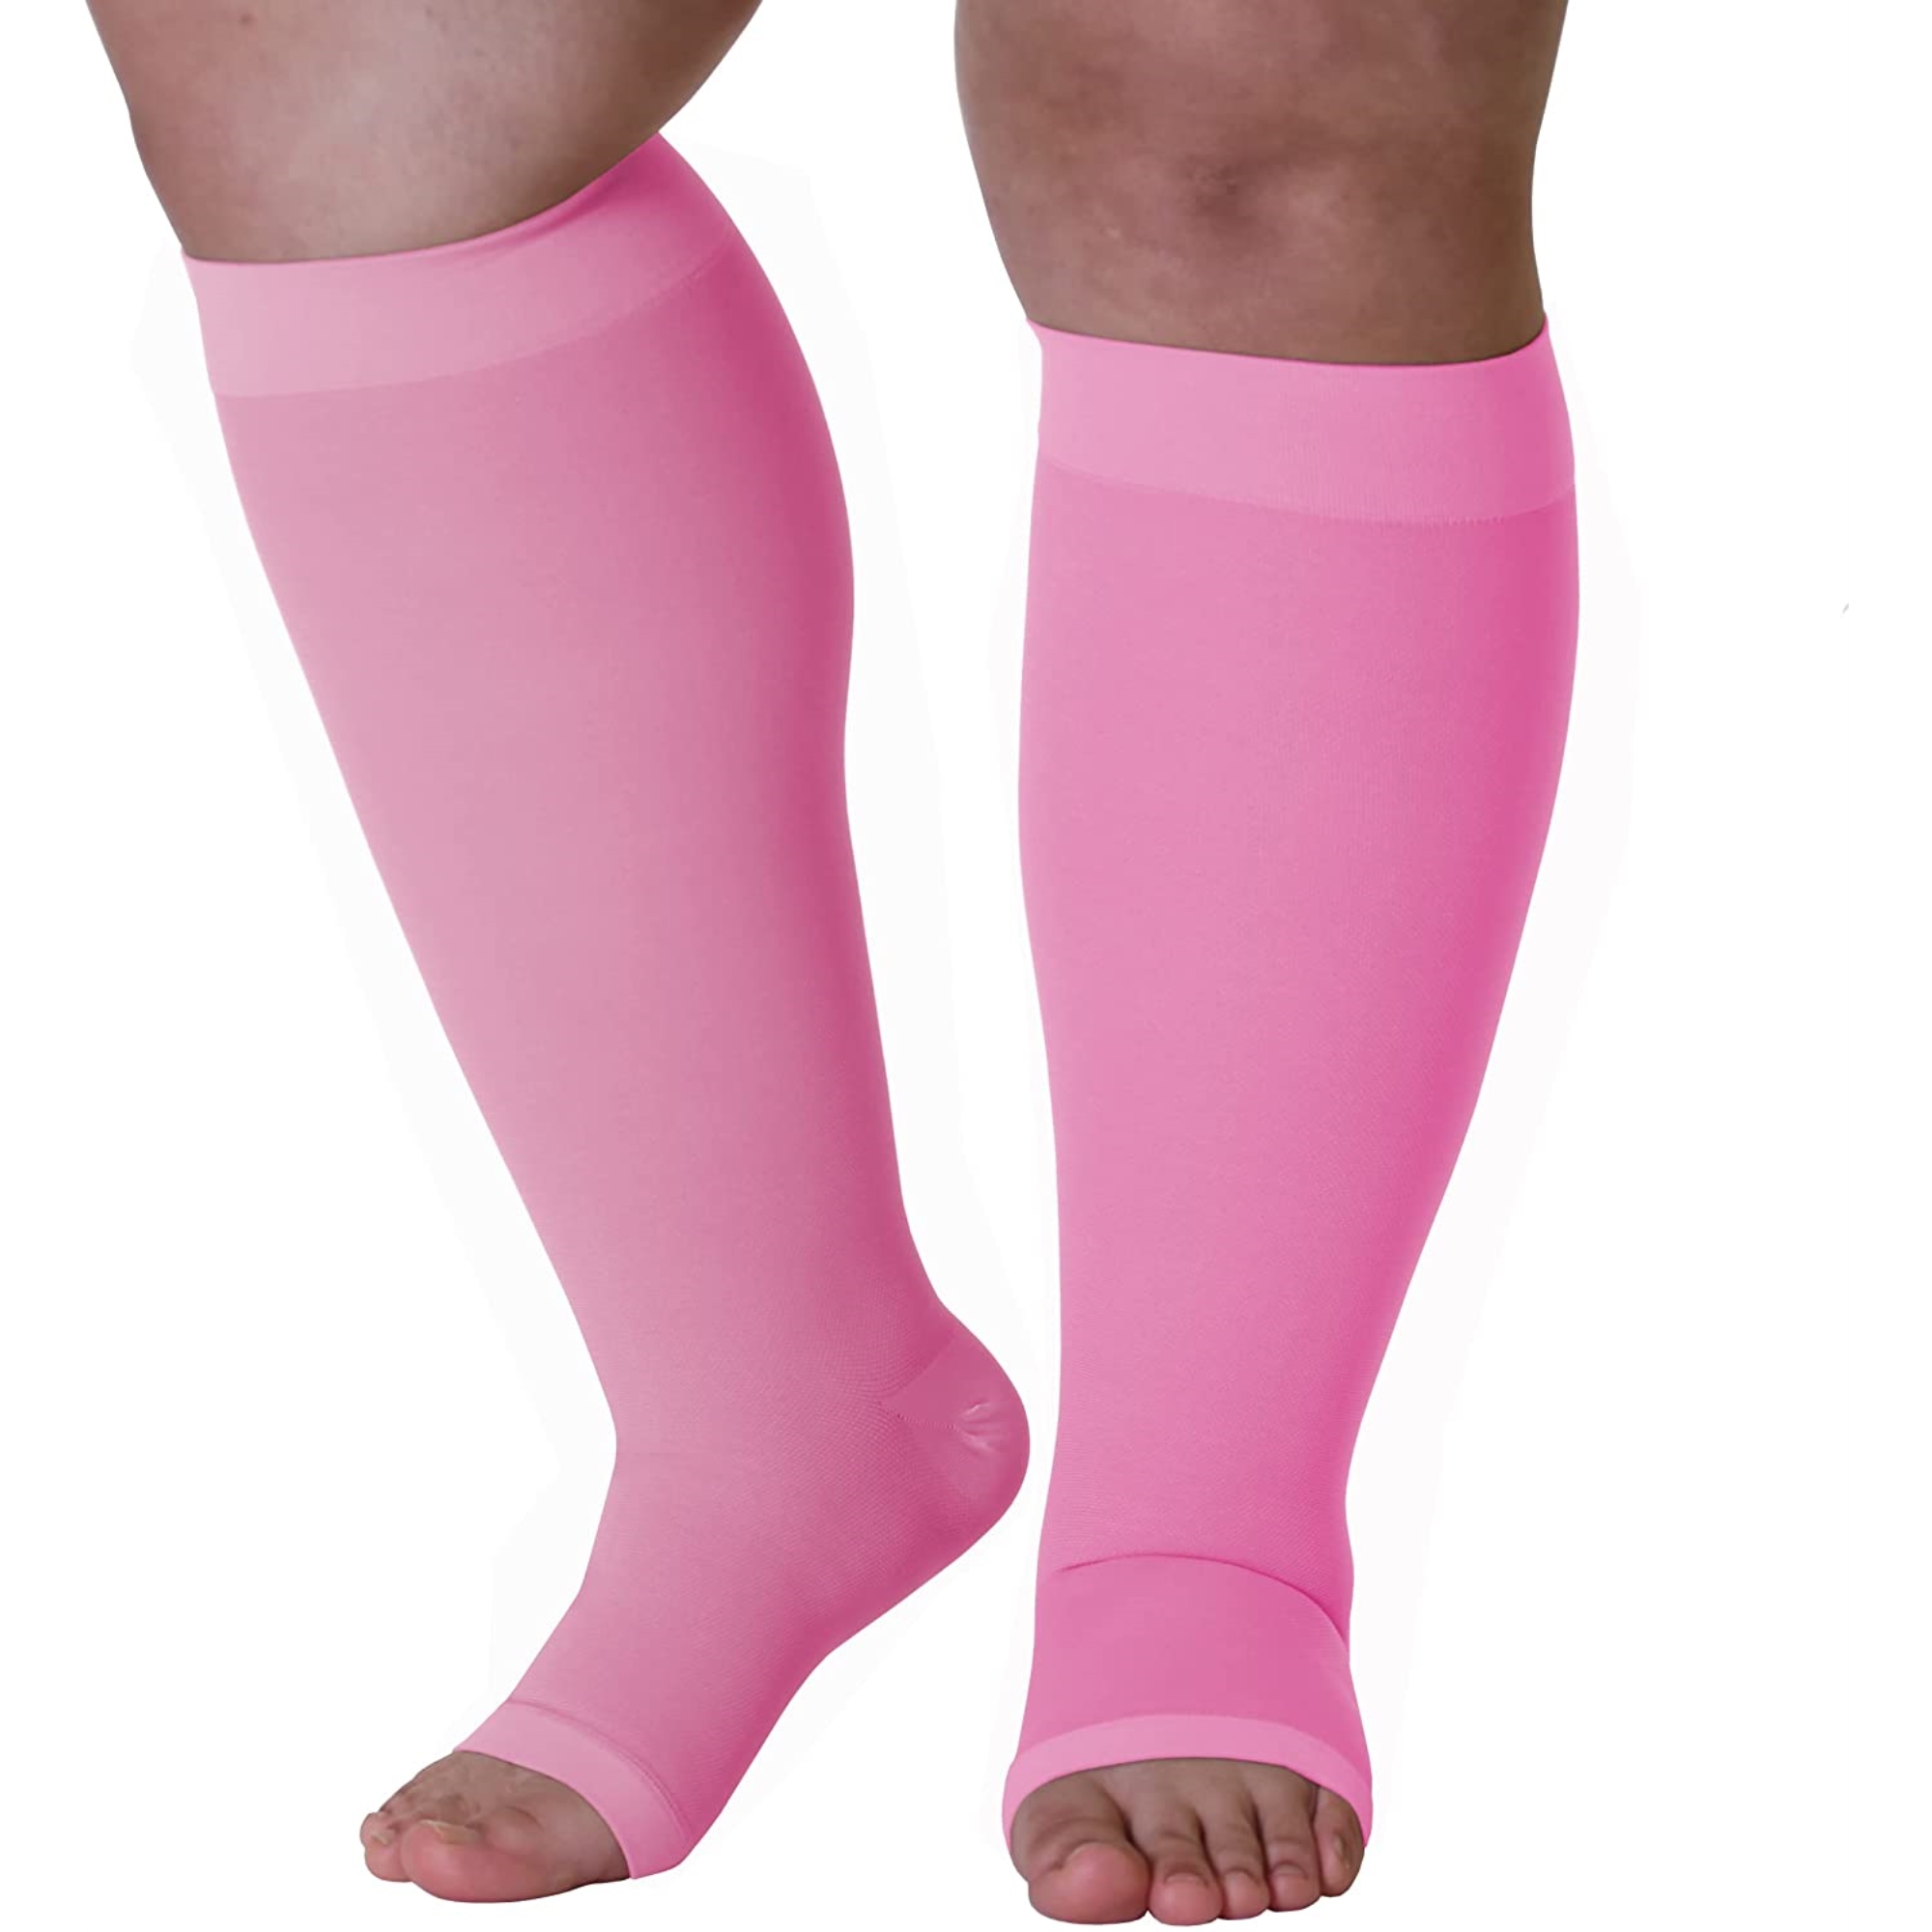  Mojo Compression Socks for Lymphatic and Circulatory